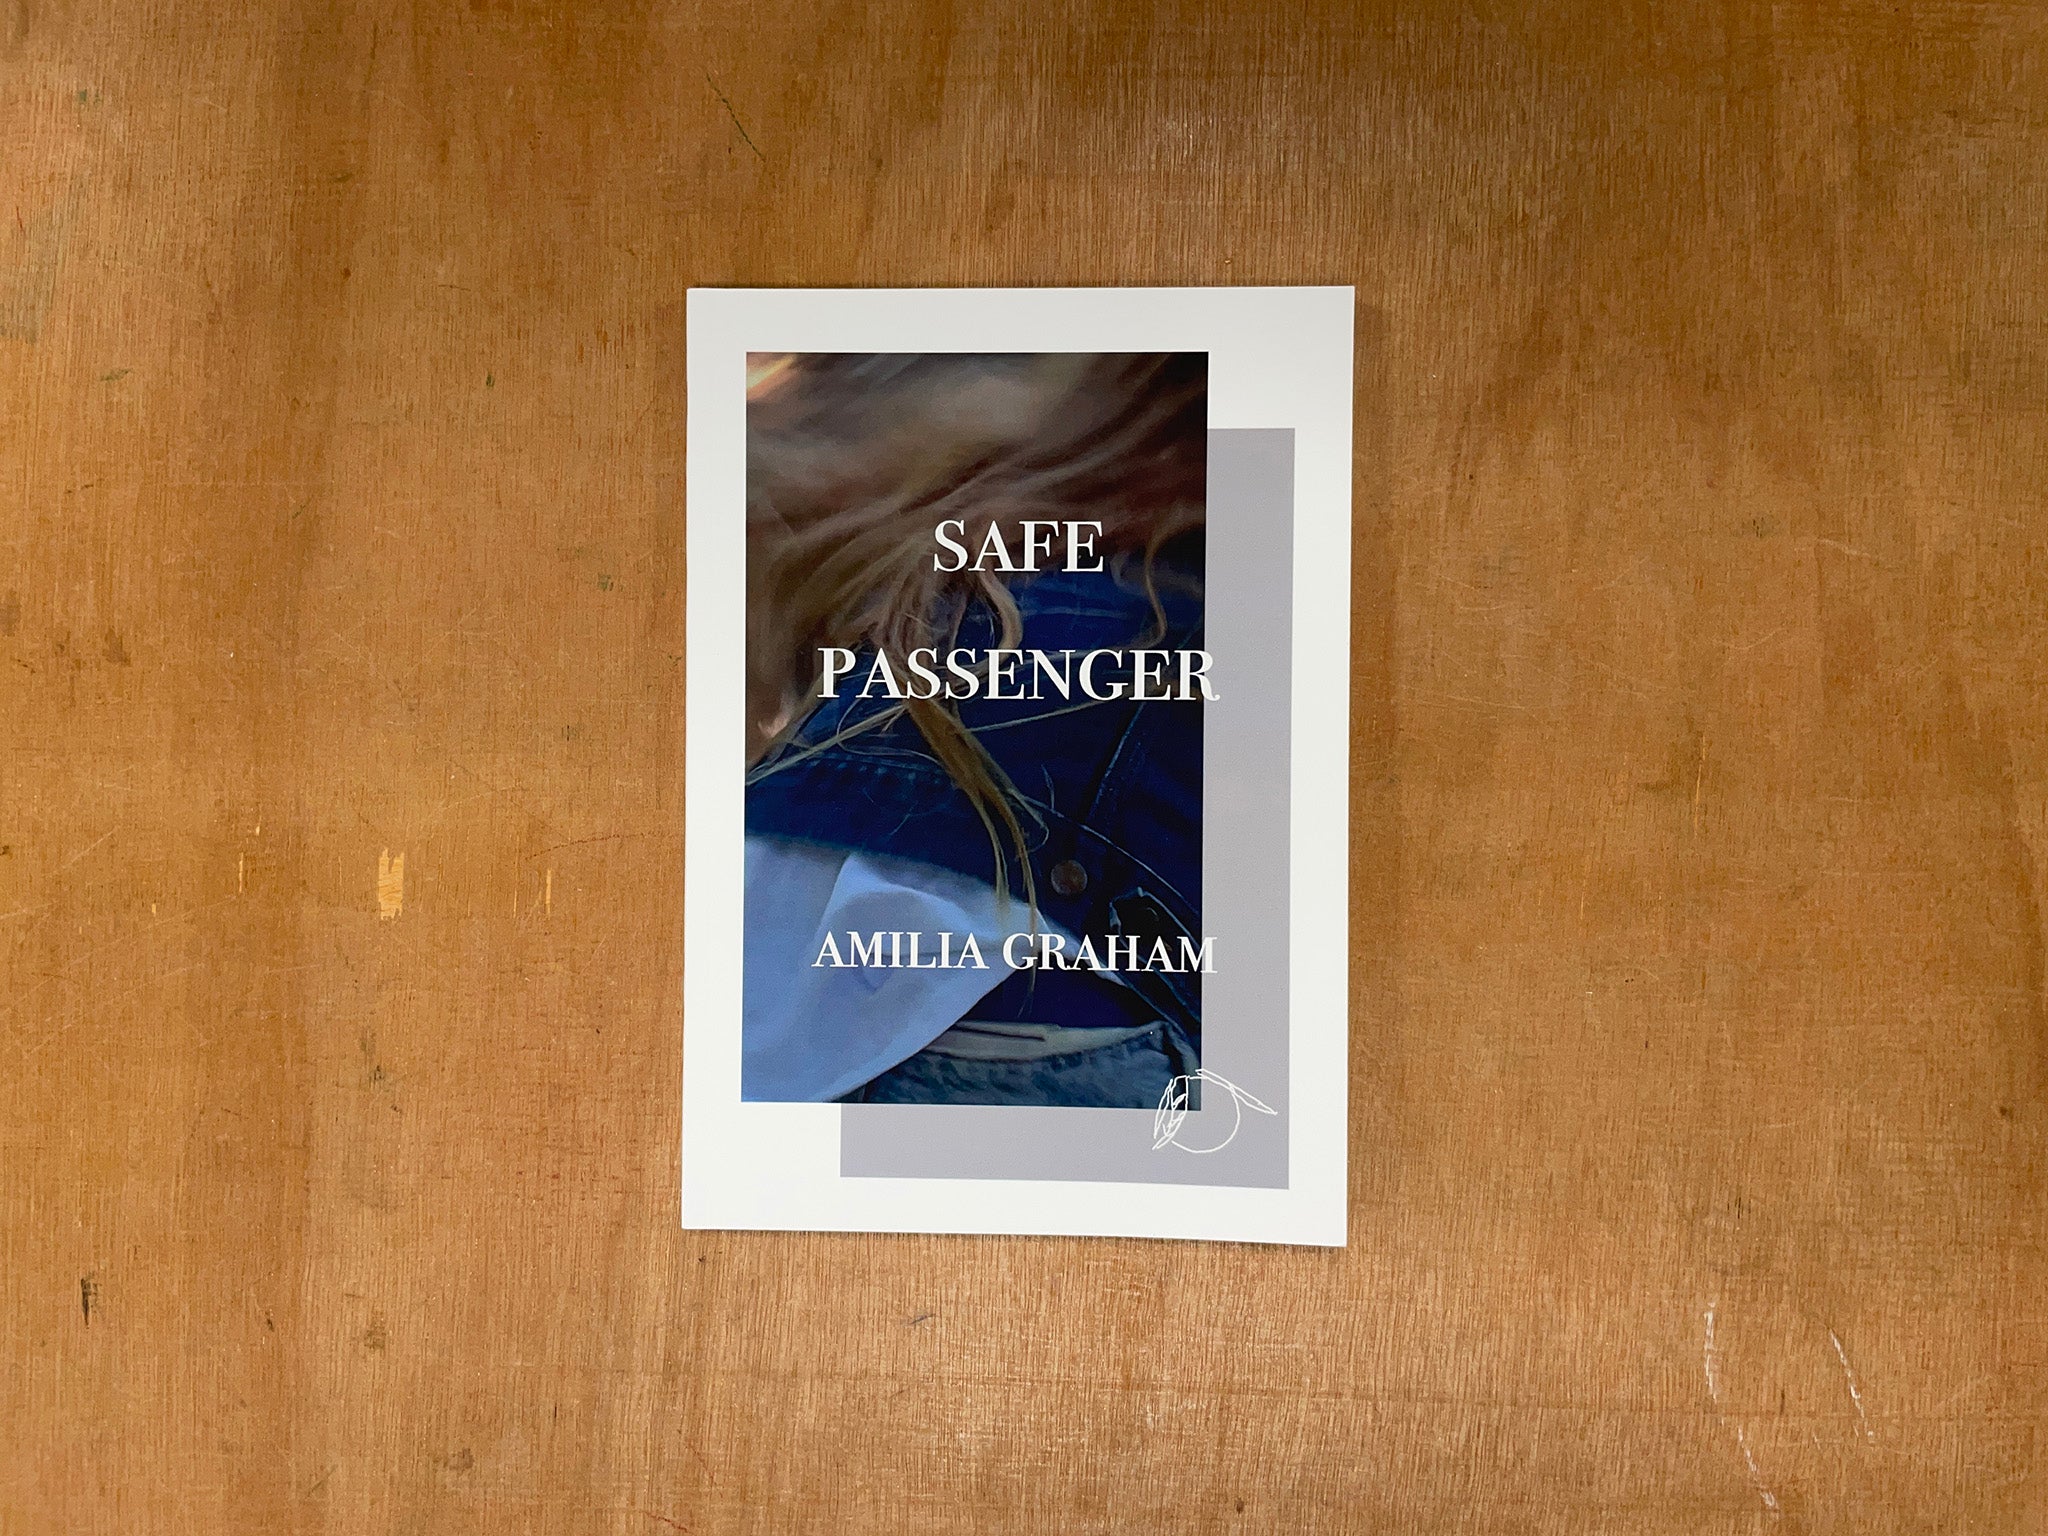 SAFE PASSENGER by Amilia Graham